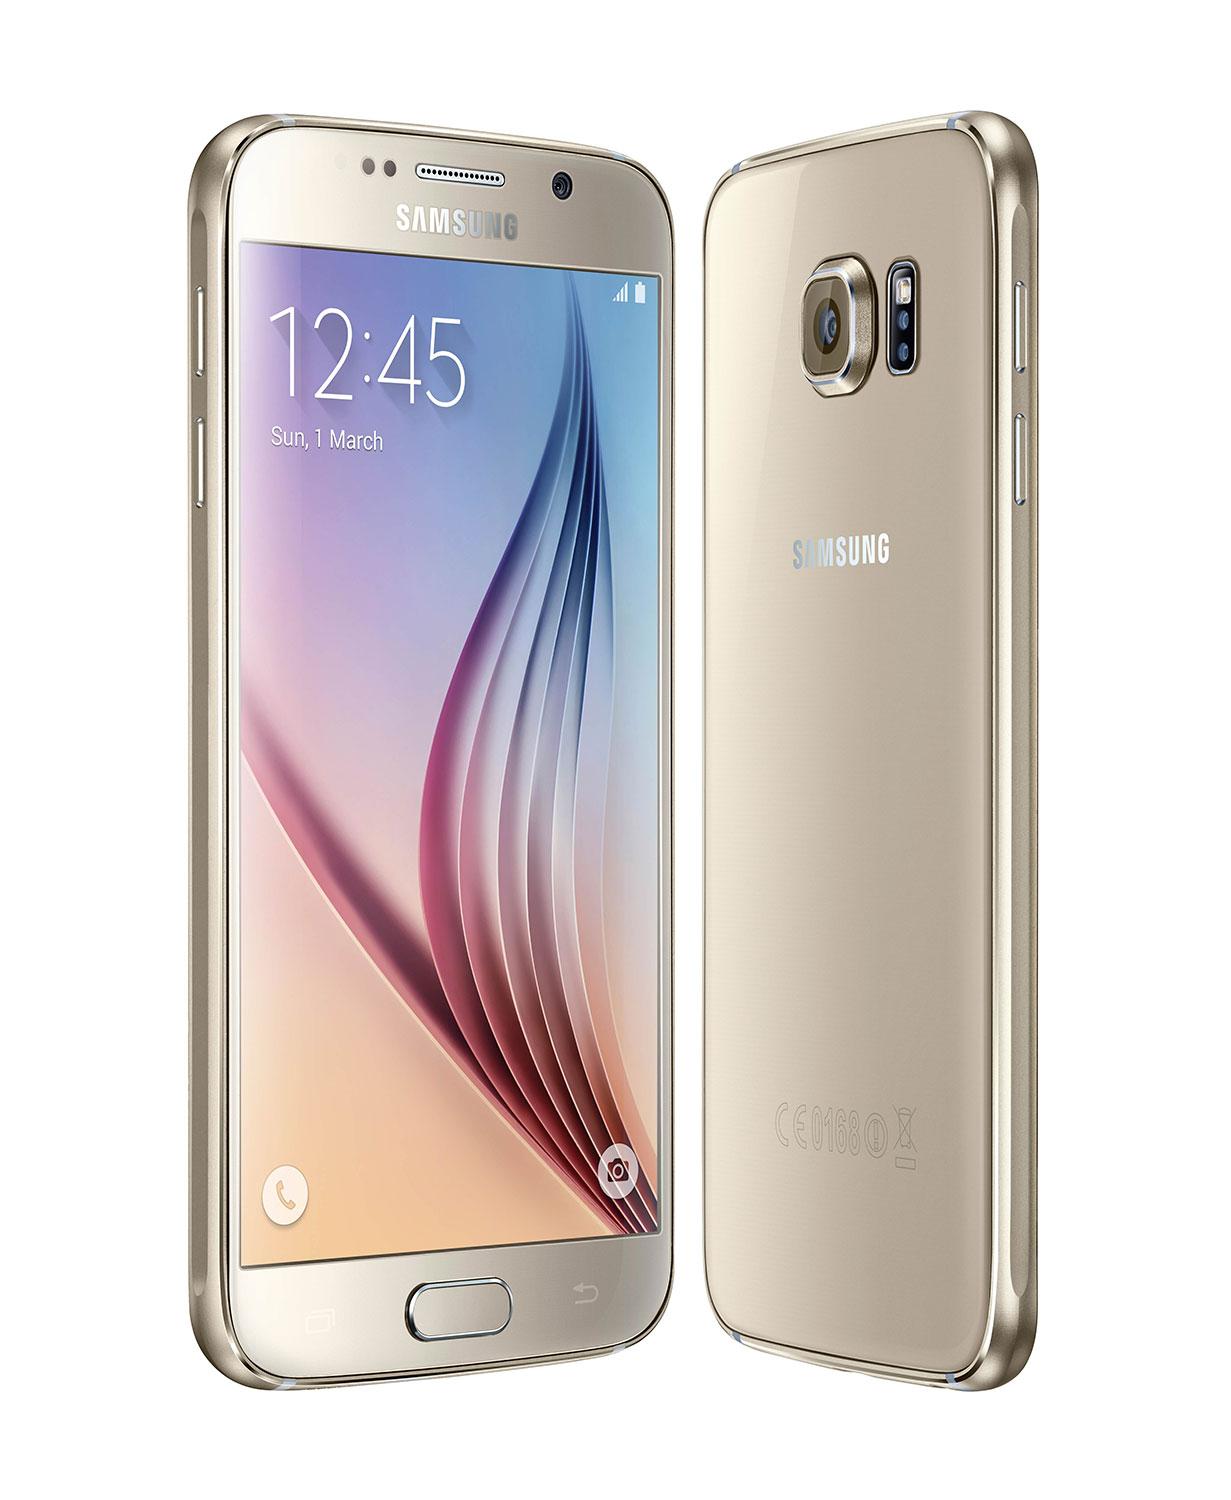 Samsung Galaxy S6 vende 10M de dispositivos